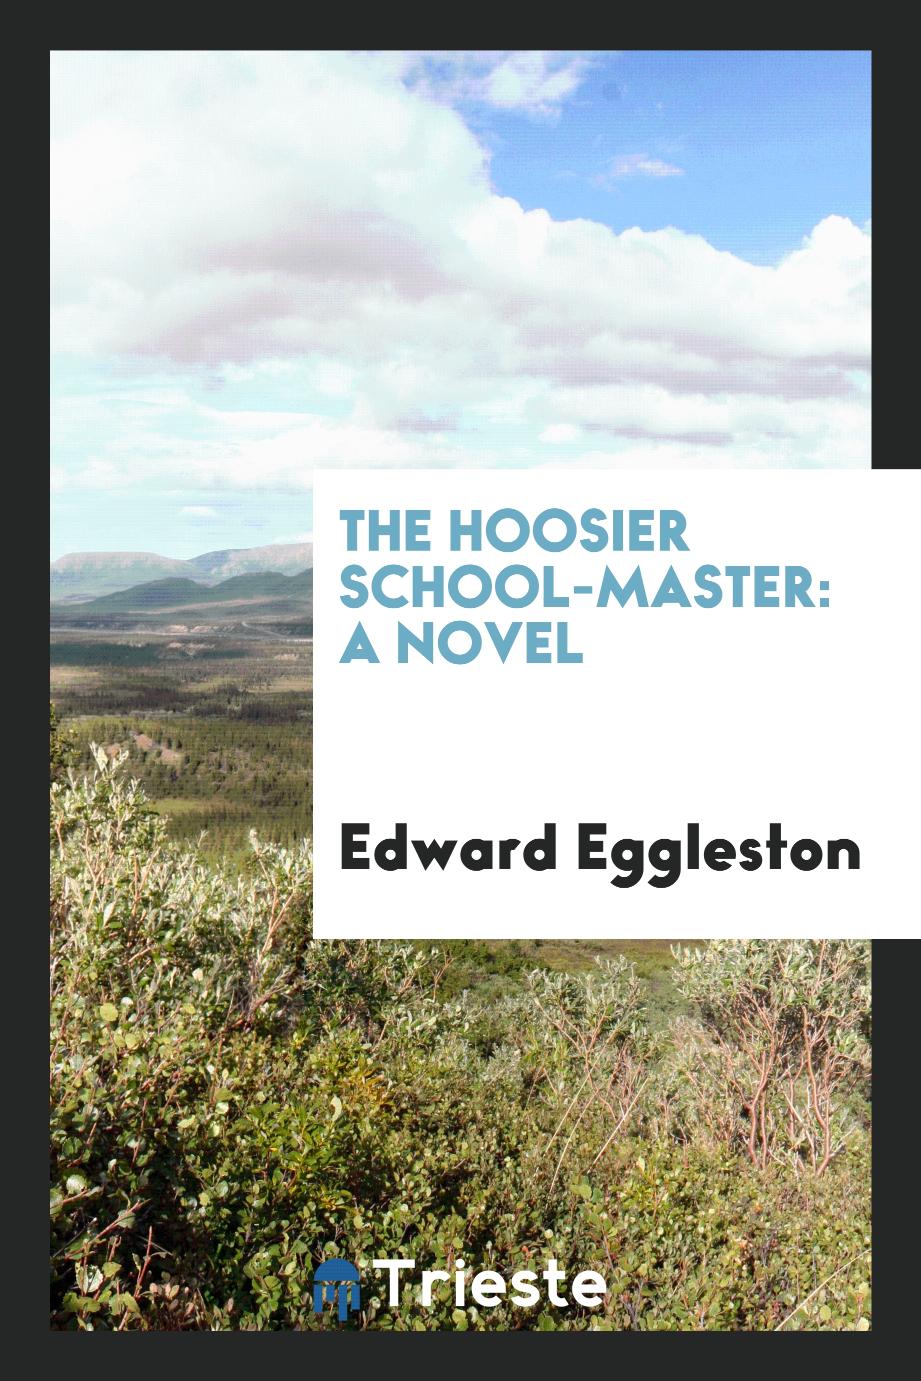 The Hoosier school-master: a novel